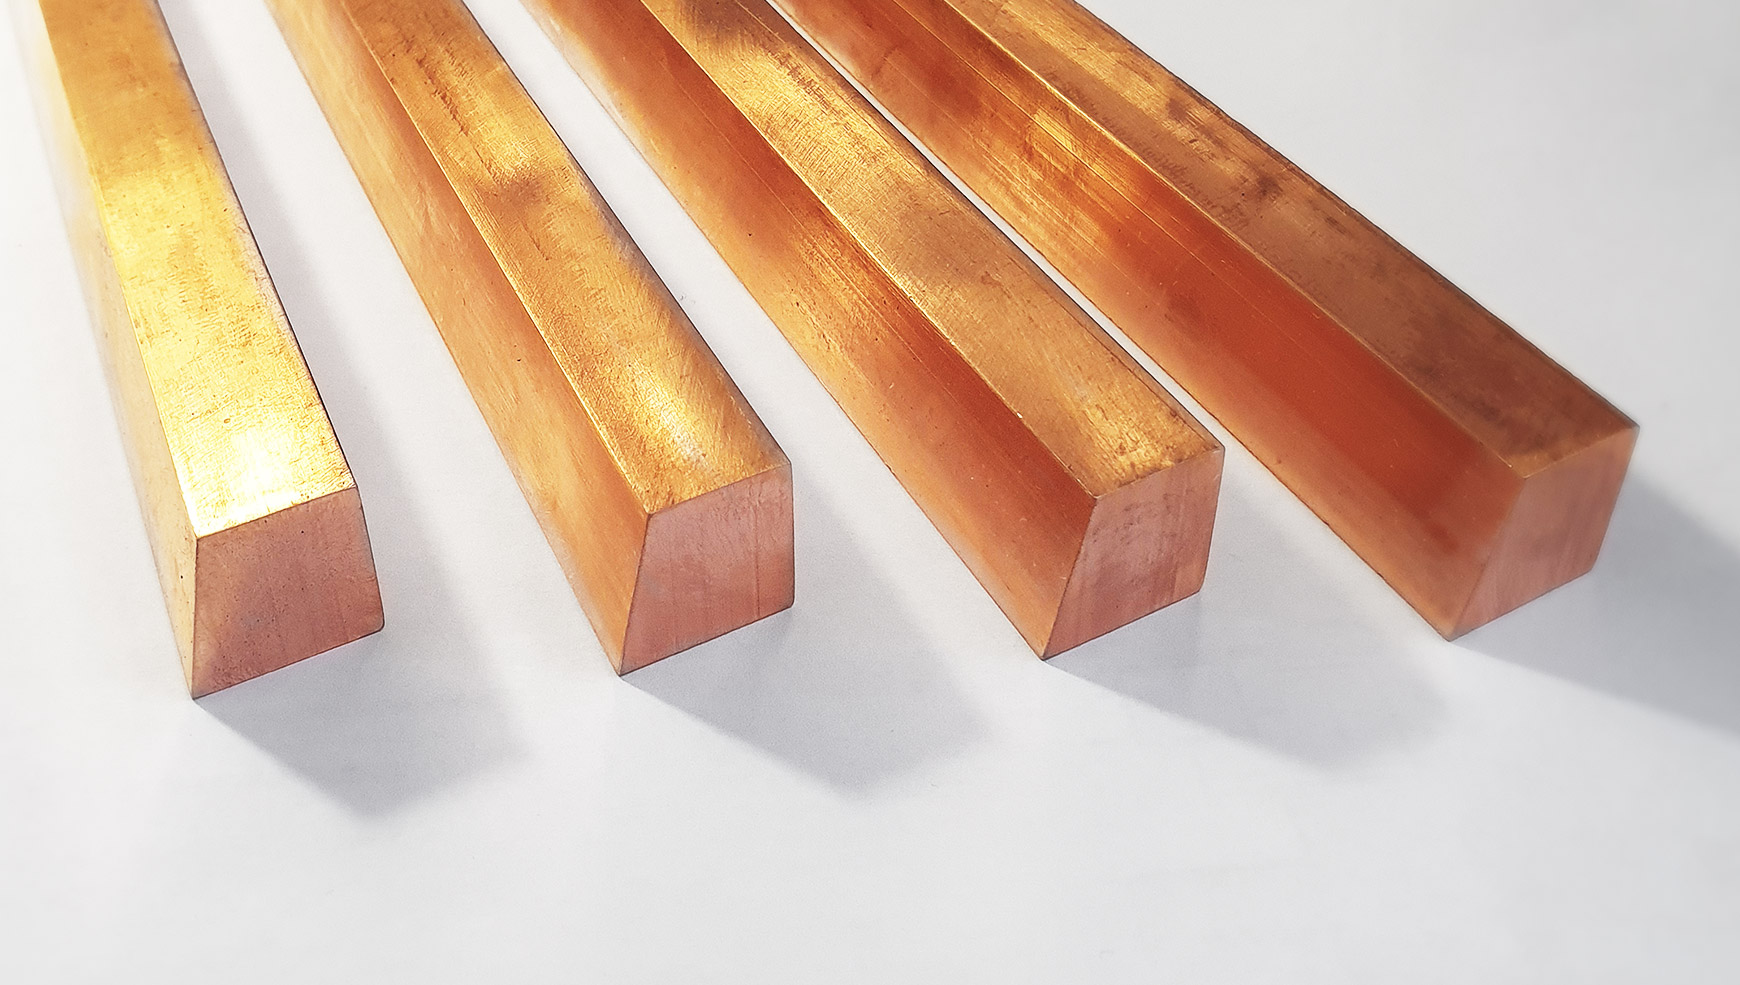 Copper electrodes for resistance welding